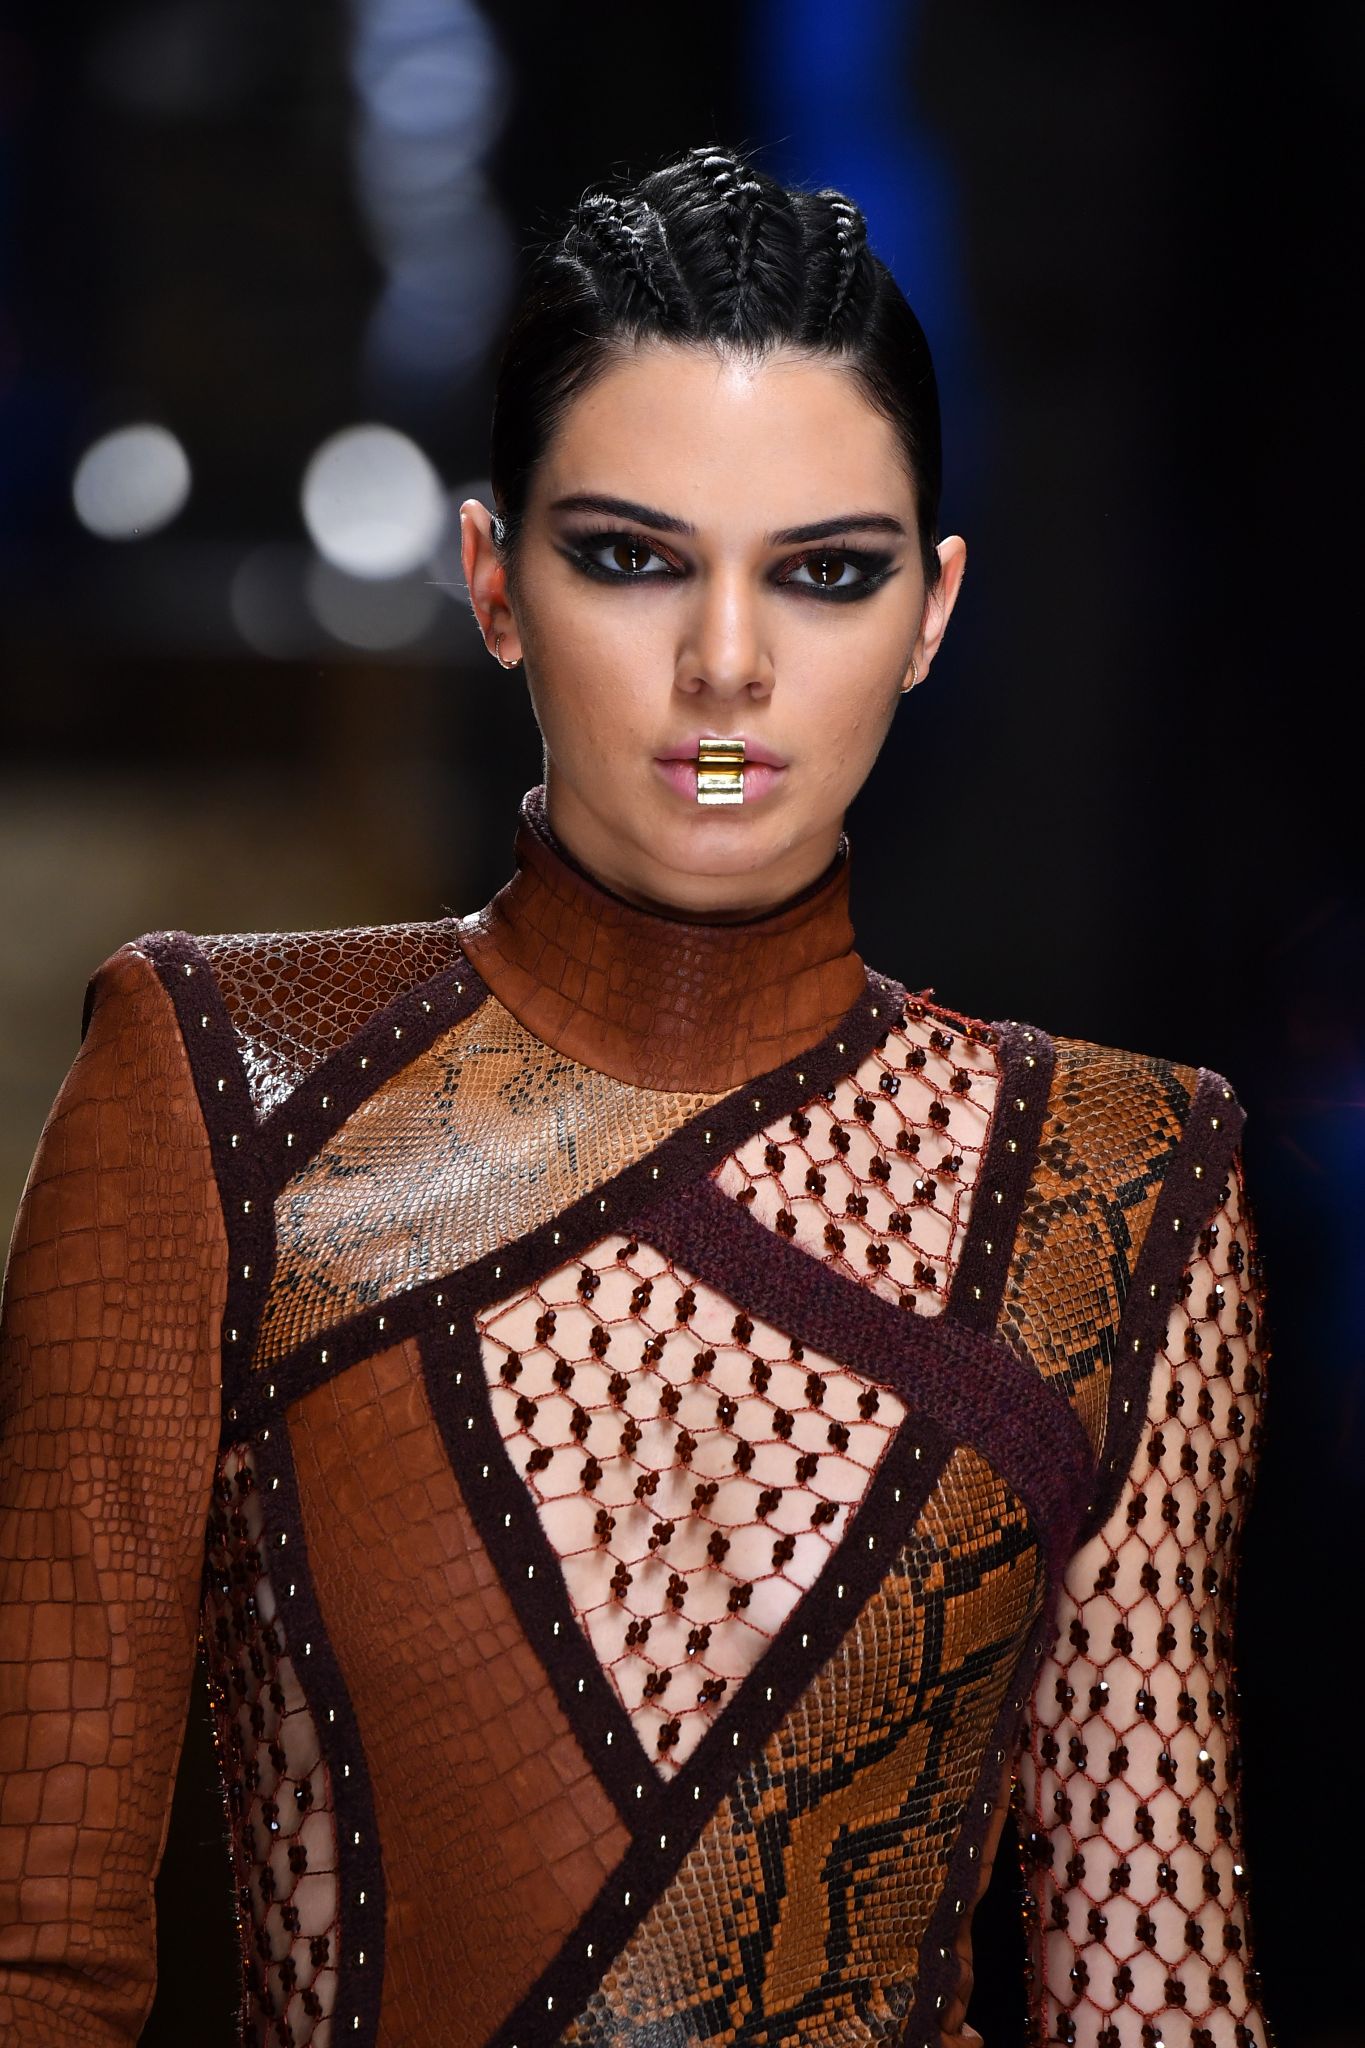 Kendall Jenner looked like a warrior princess at Paris Fashion Week